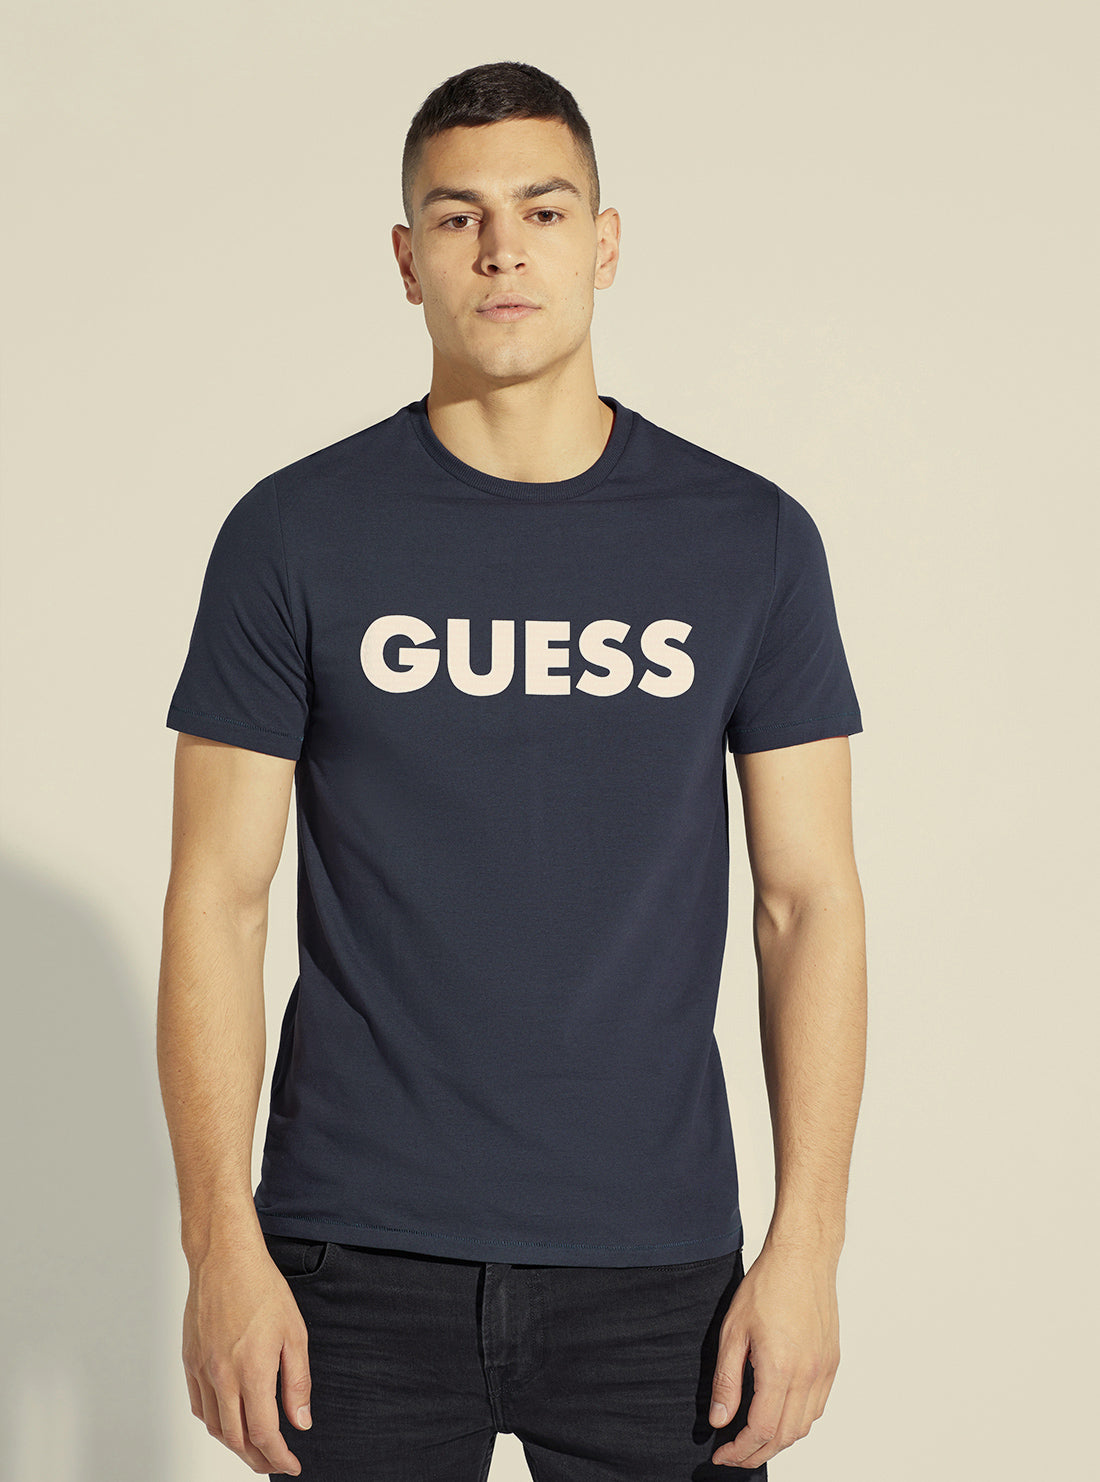 GUESS Men's Blue Labyrinth Logo T-Shirt M2YI42J1311 Front View